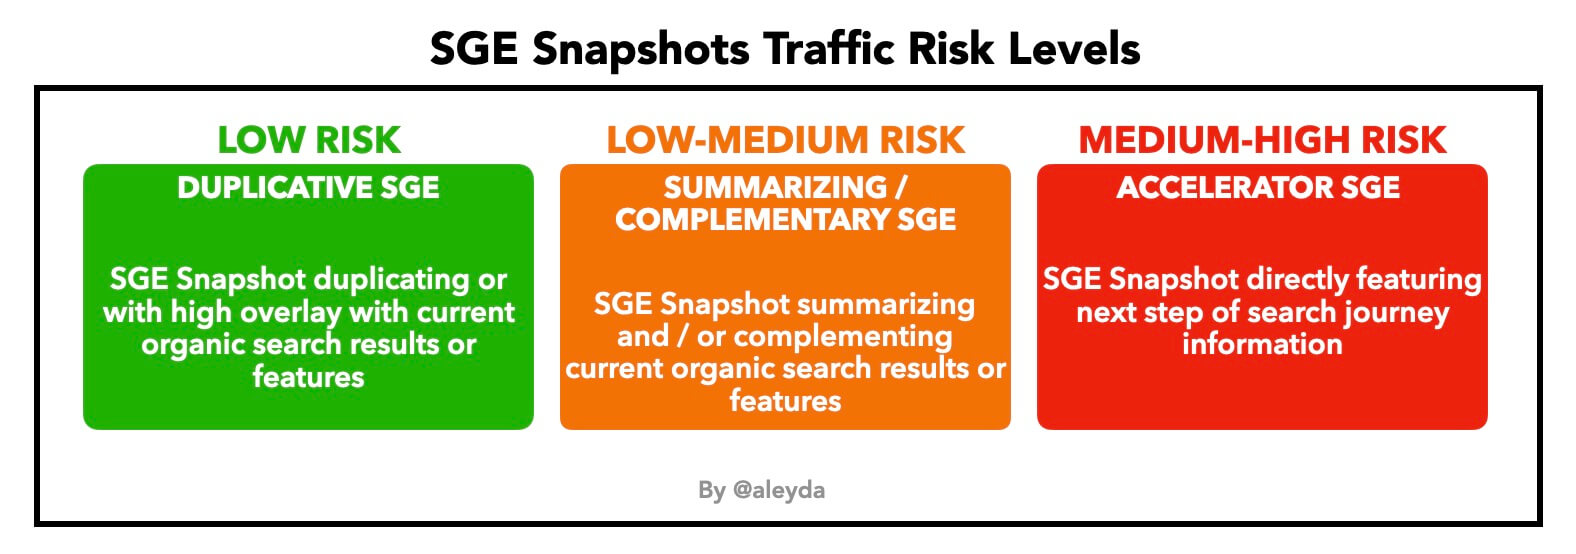 SGE Snapshots Traffic Risk Levels